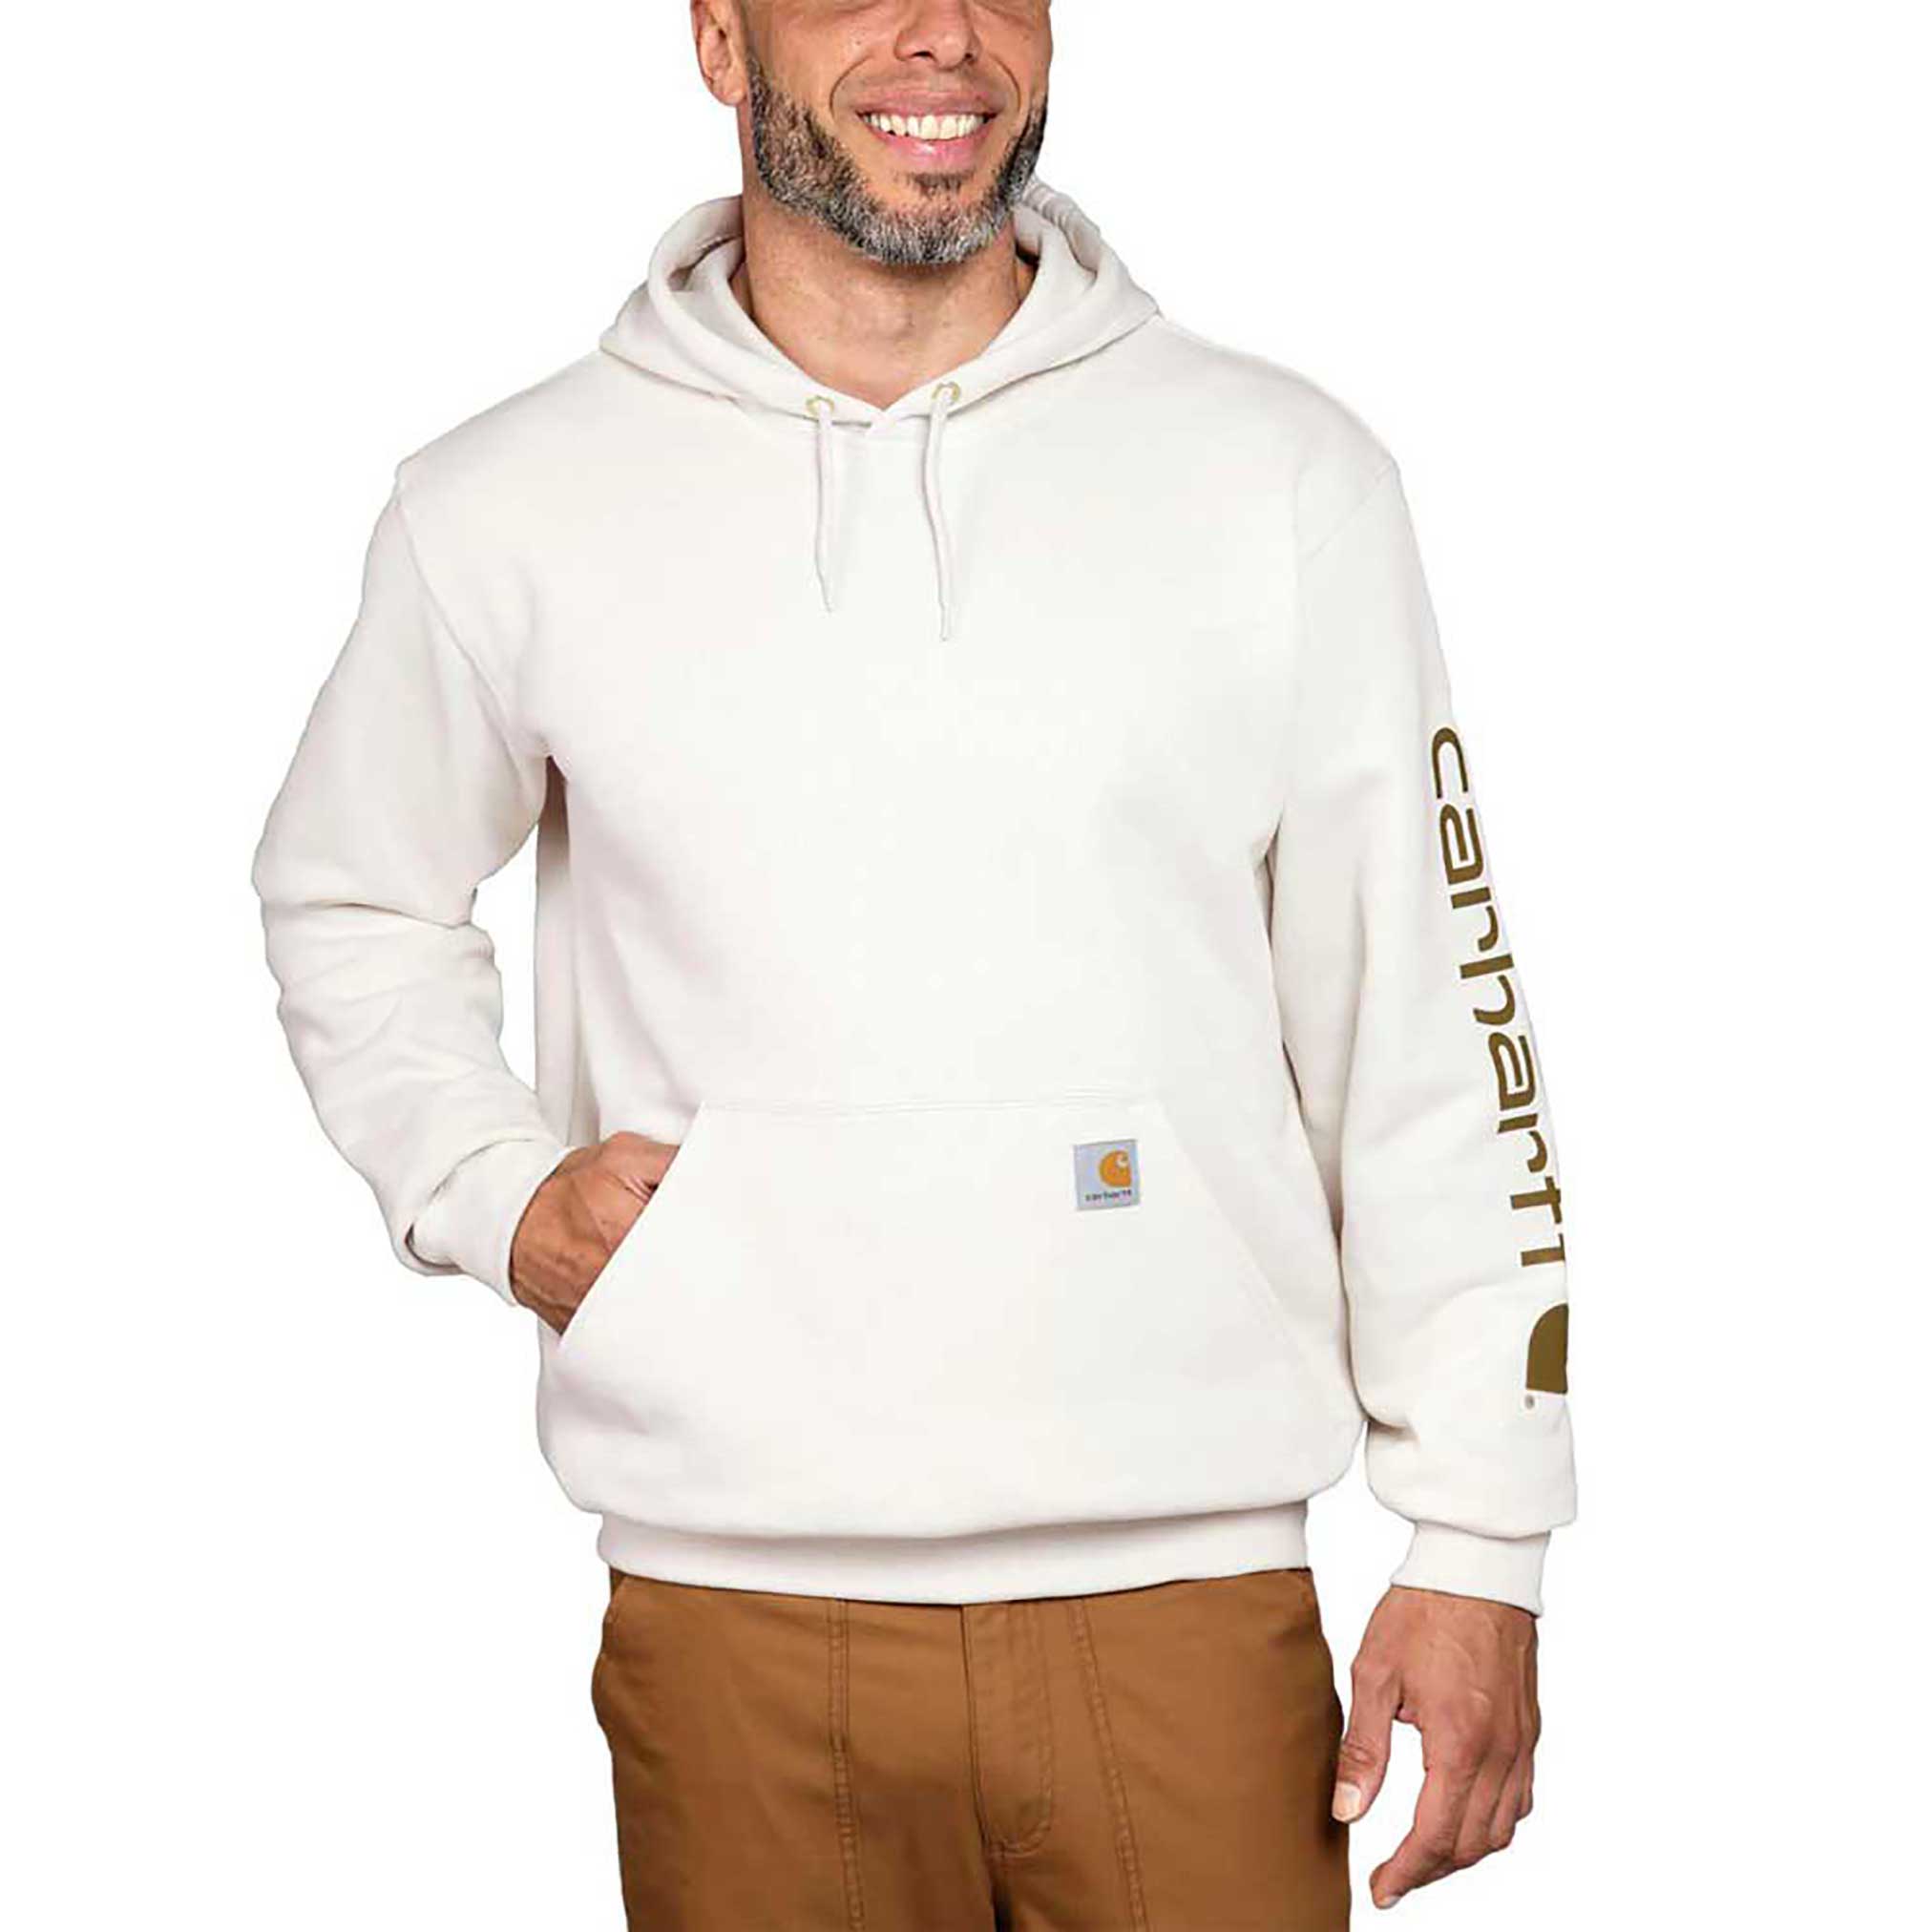 Carhartt Men's Midweight Logo Hooded Sweatshirt